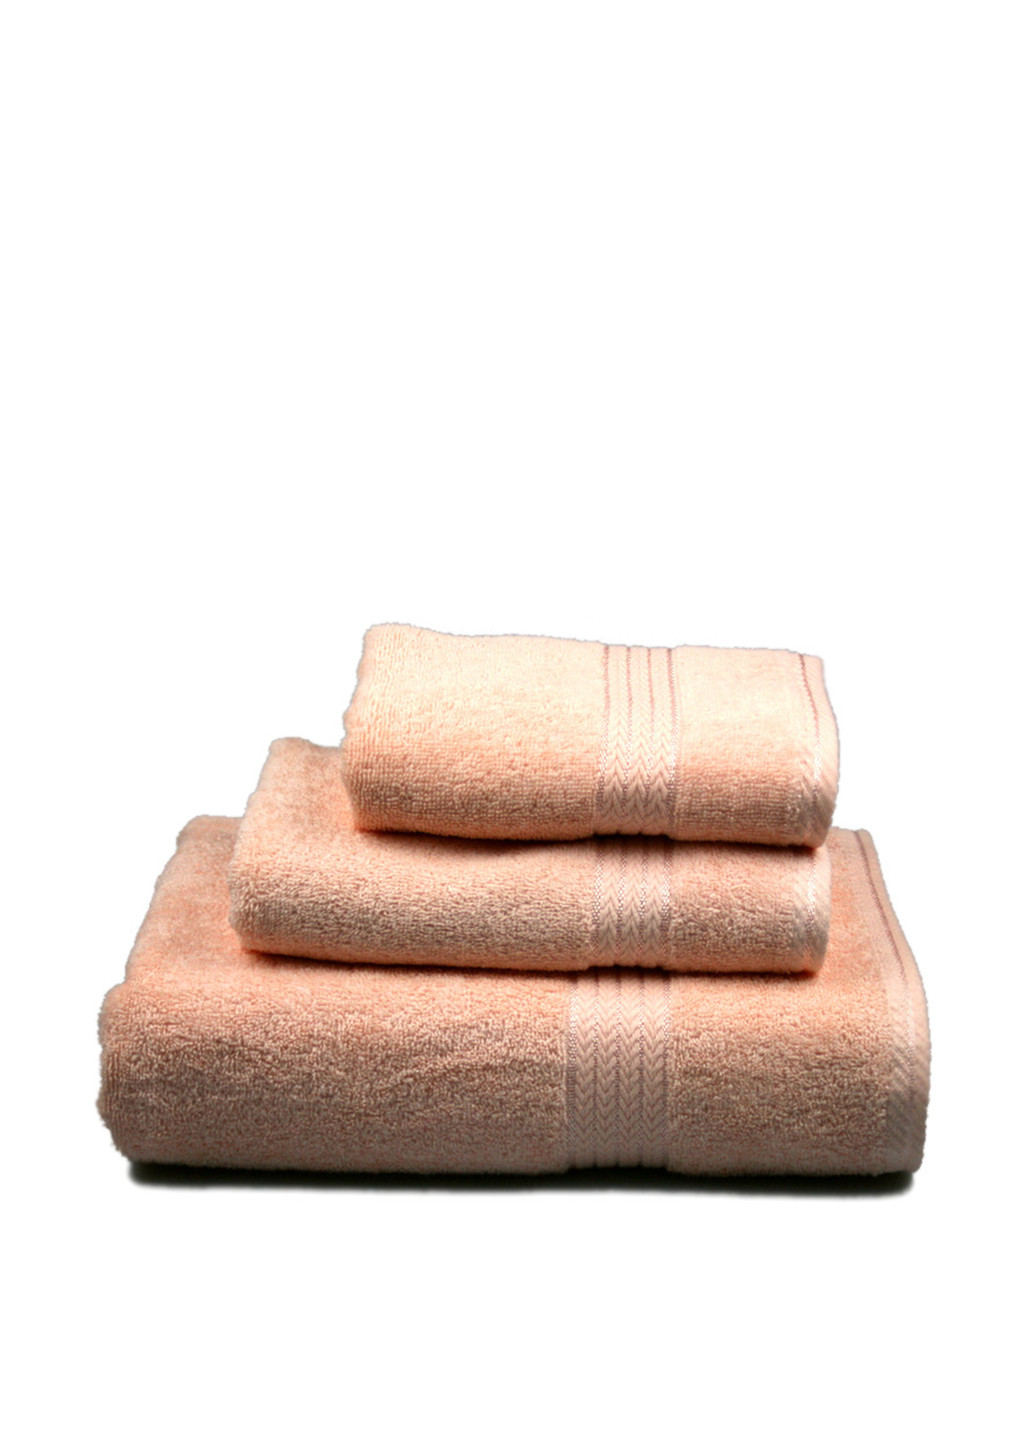 No Brand полотенце, 70х140 см однотонный персиковый производство - Пакистан